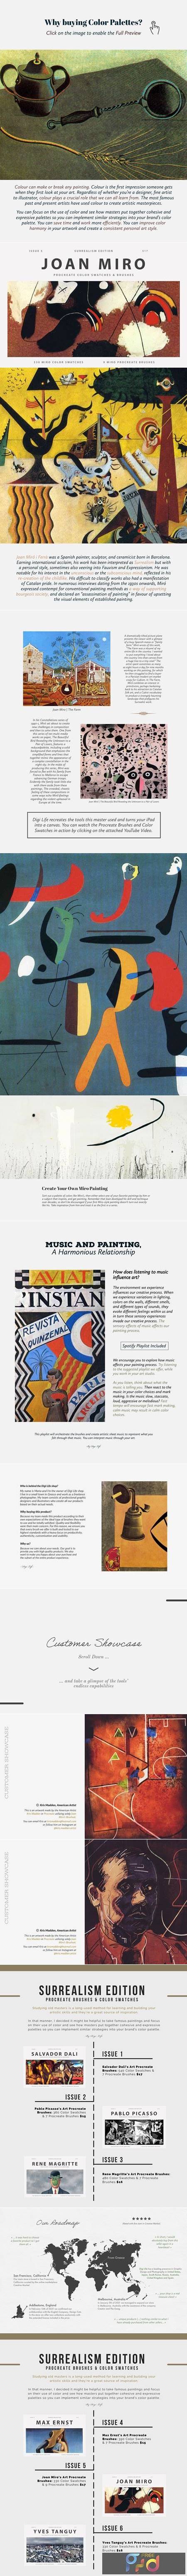 Joan Miros Art Procreate Brushes 5965790 1